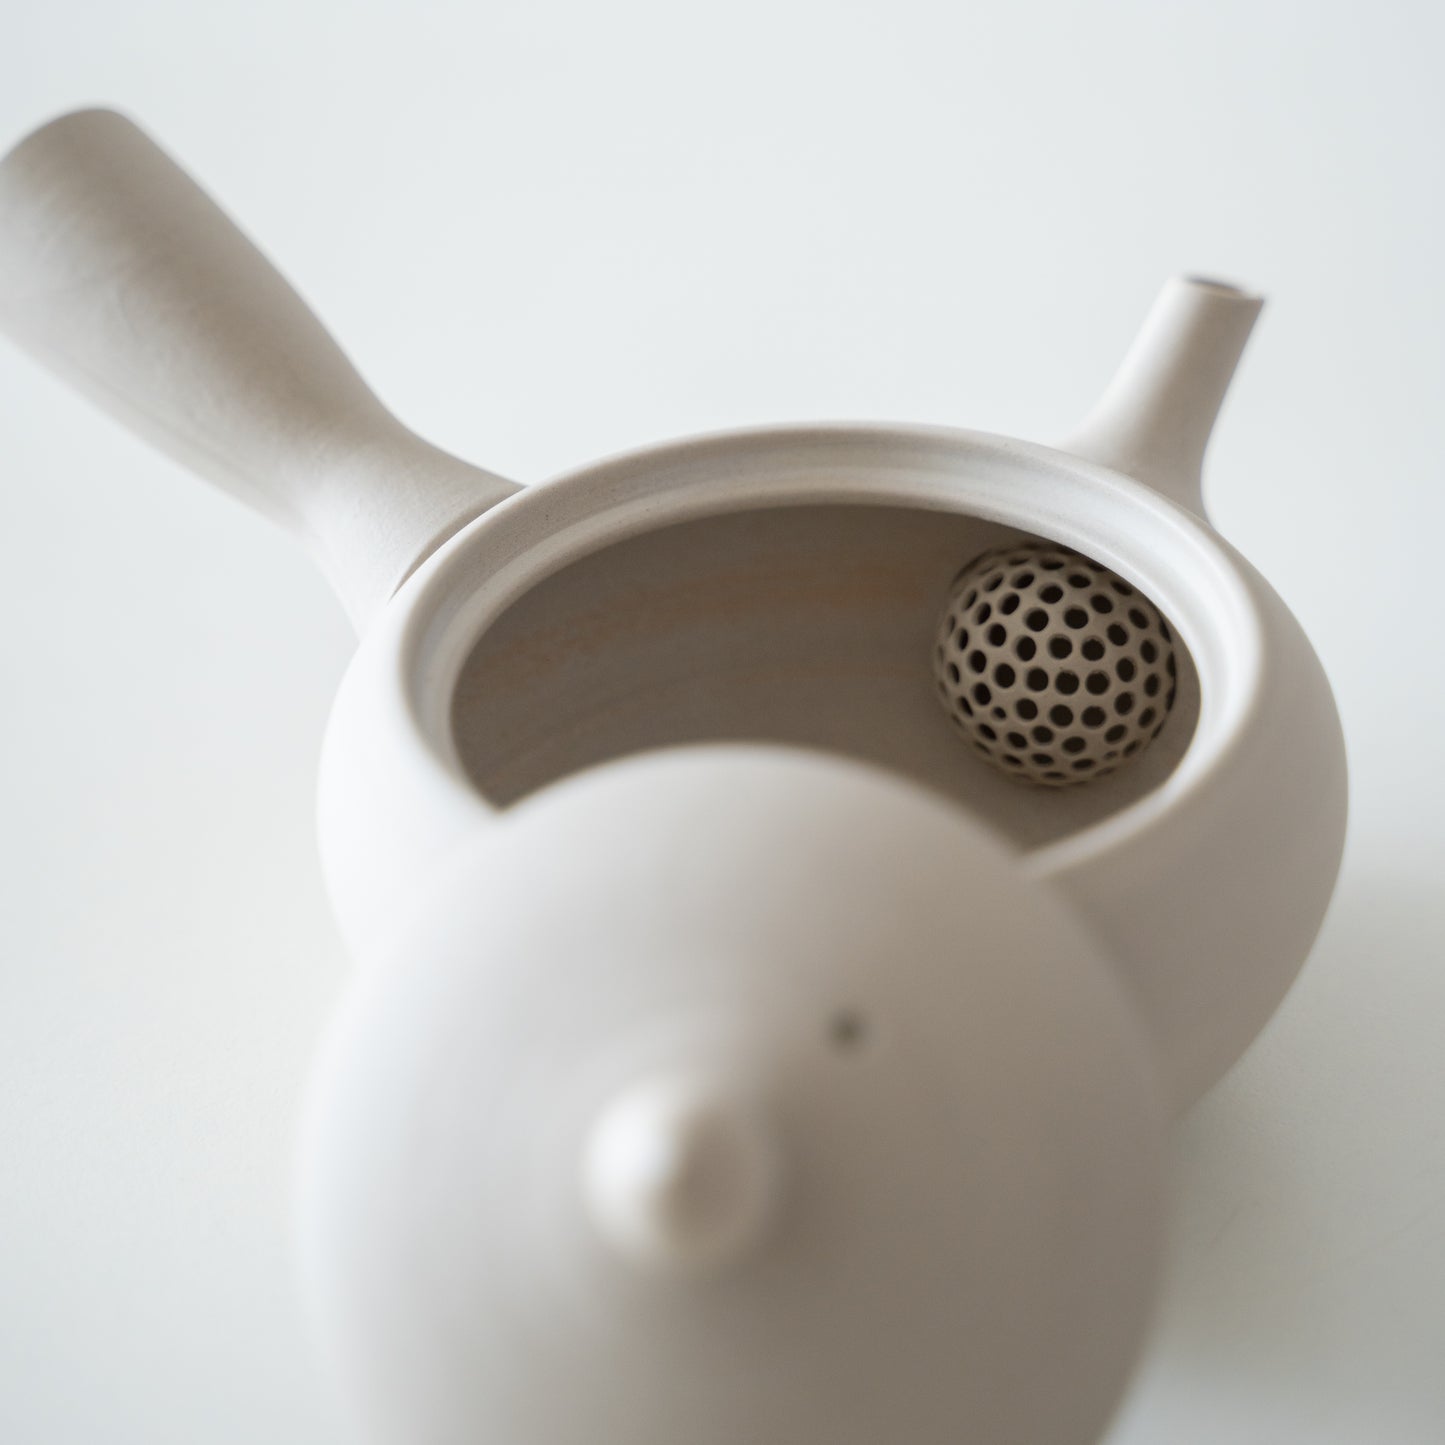 Japanese Teapot (Kyusu)  with Tea Strainer - White